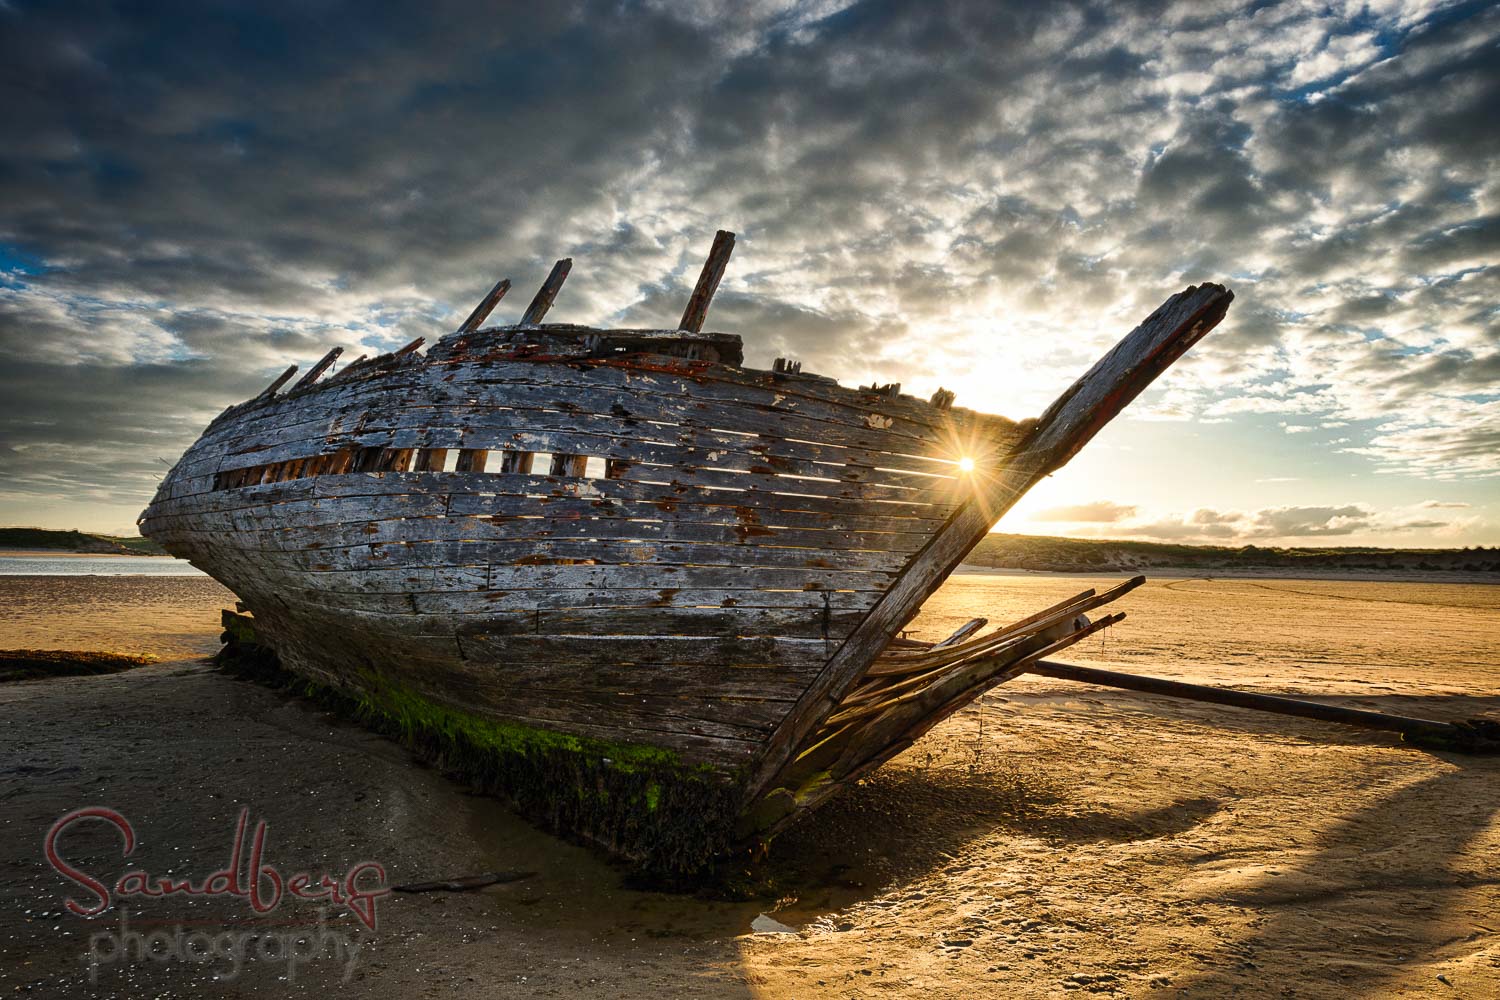 Bunbeg shipwreck